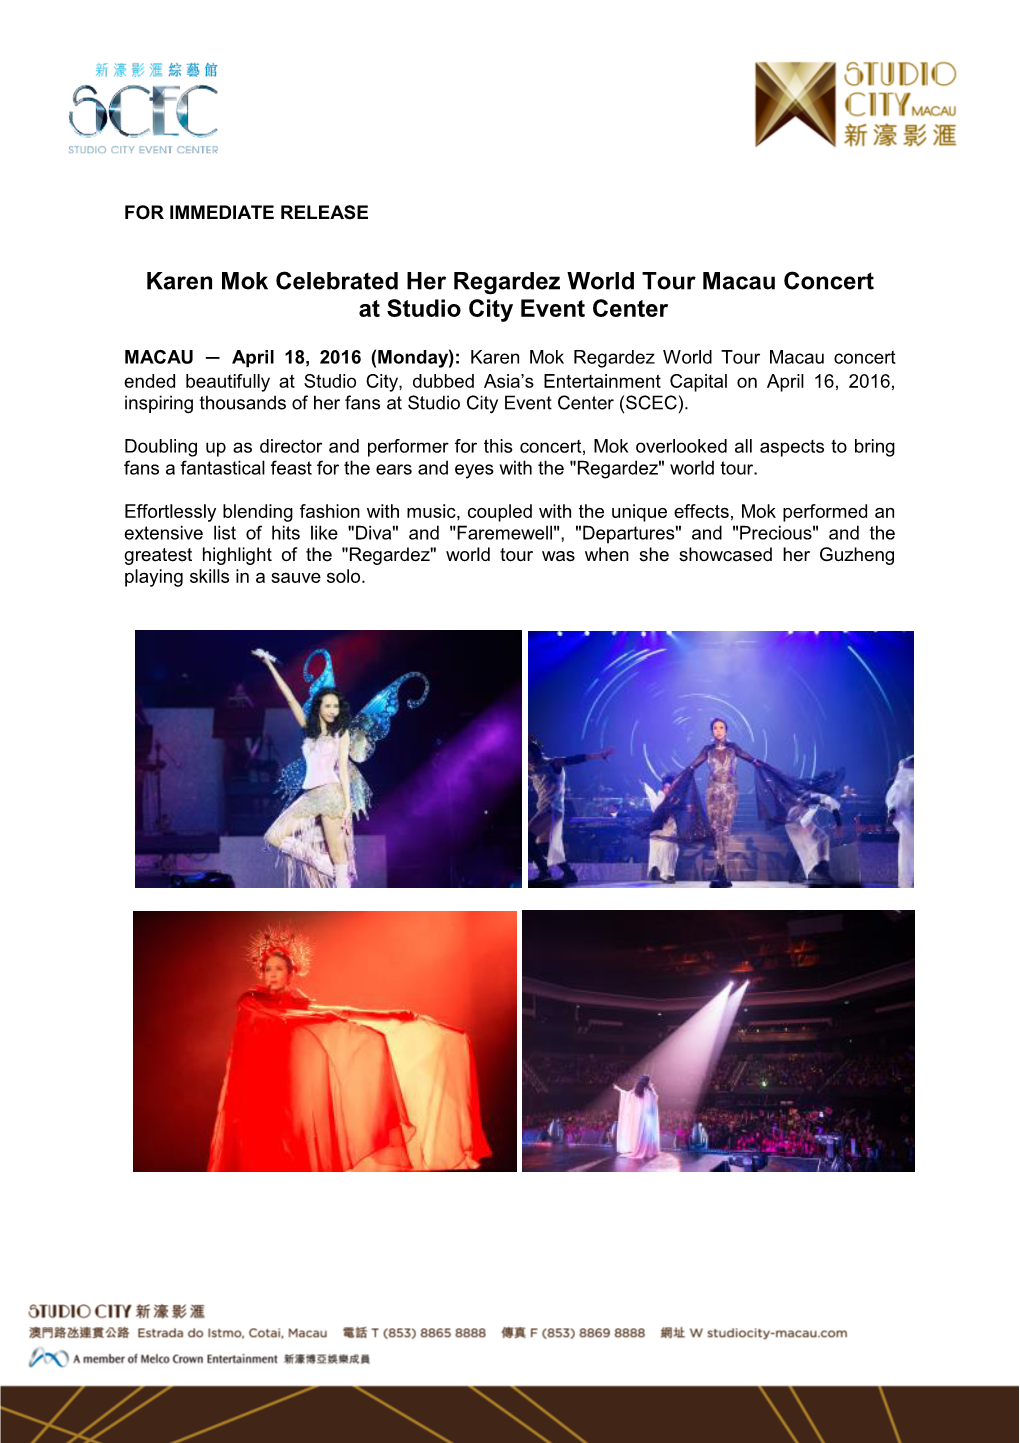 Karen Mok Celebrated Her Regardez World Tour Macau Concert at Studio City Event Center